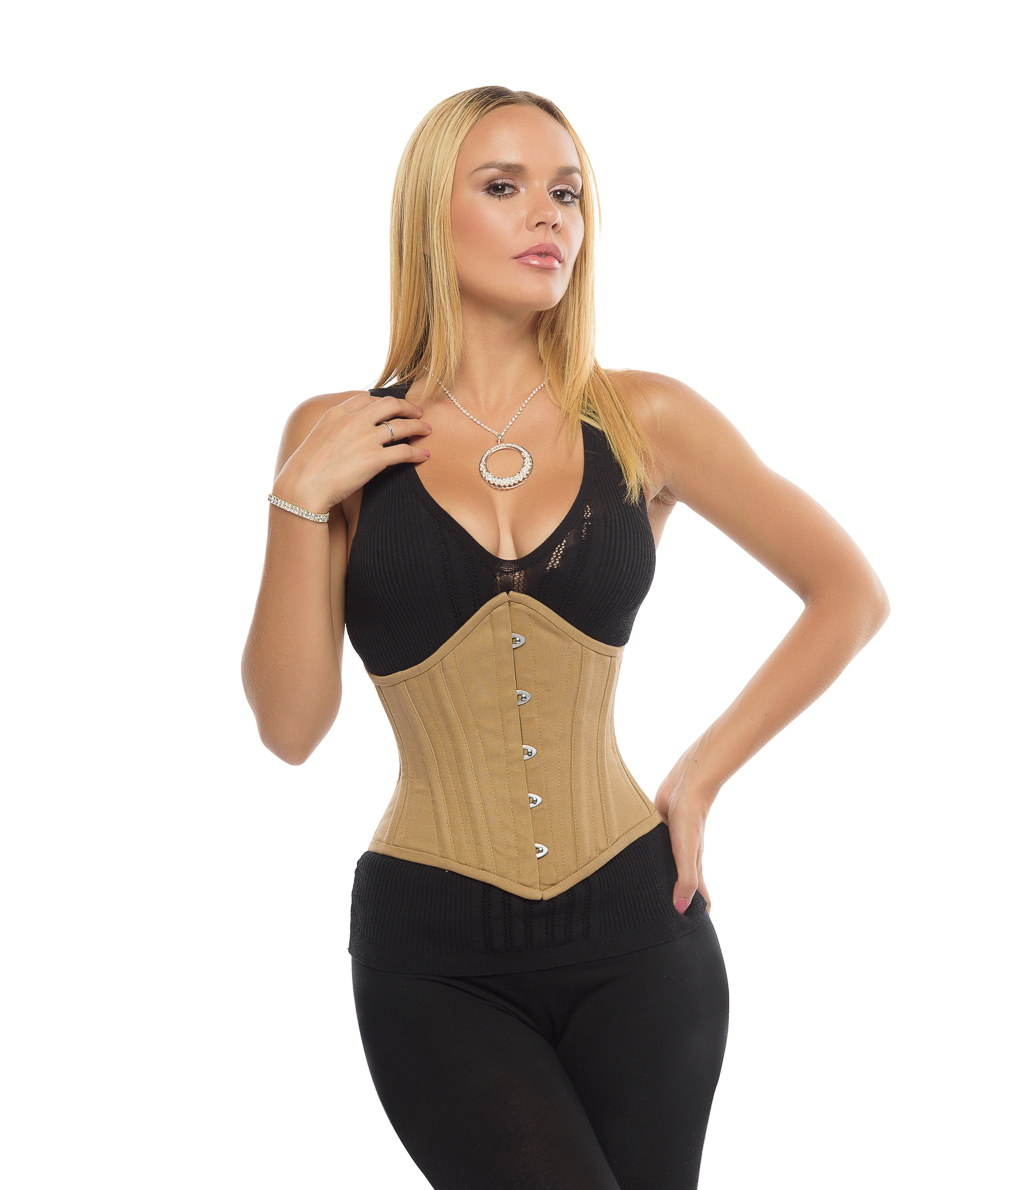 https://glamorouscorset.com/wp-content/uploads/2021/01/kayla-beige-cotton-corset-front.jpg